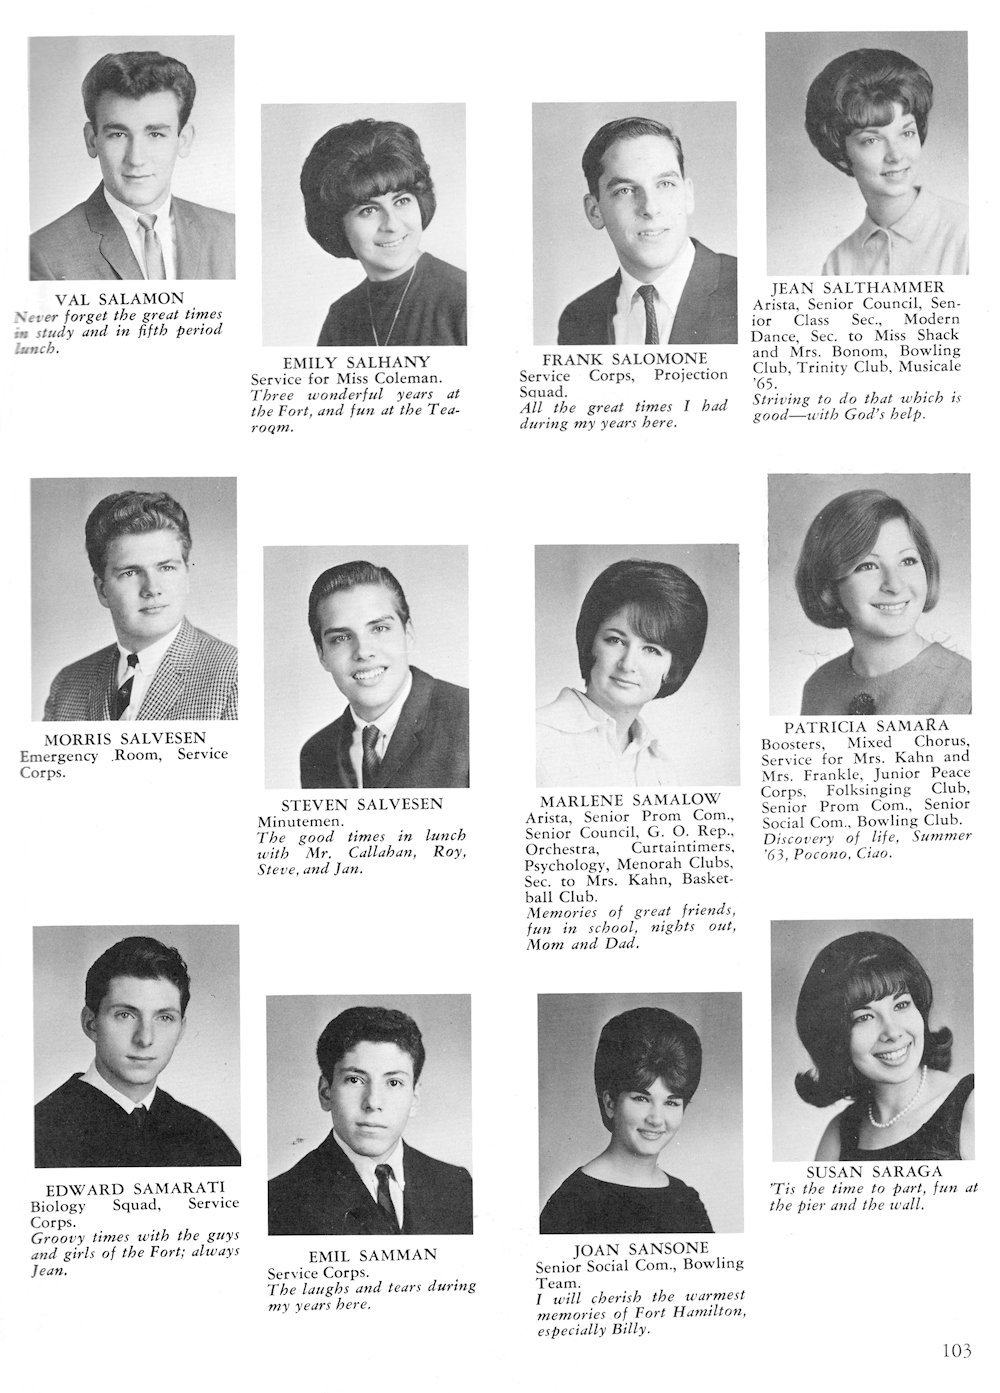 Salamon-Saraga page from Fort Hamilton High School 1965